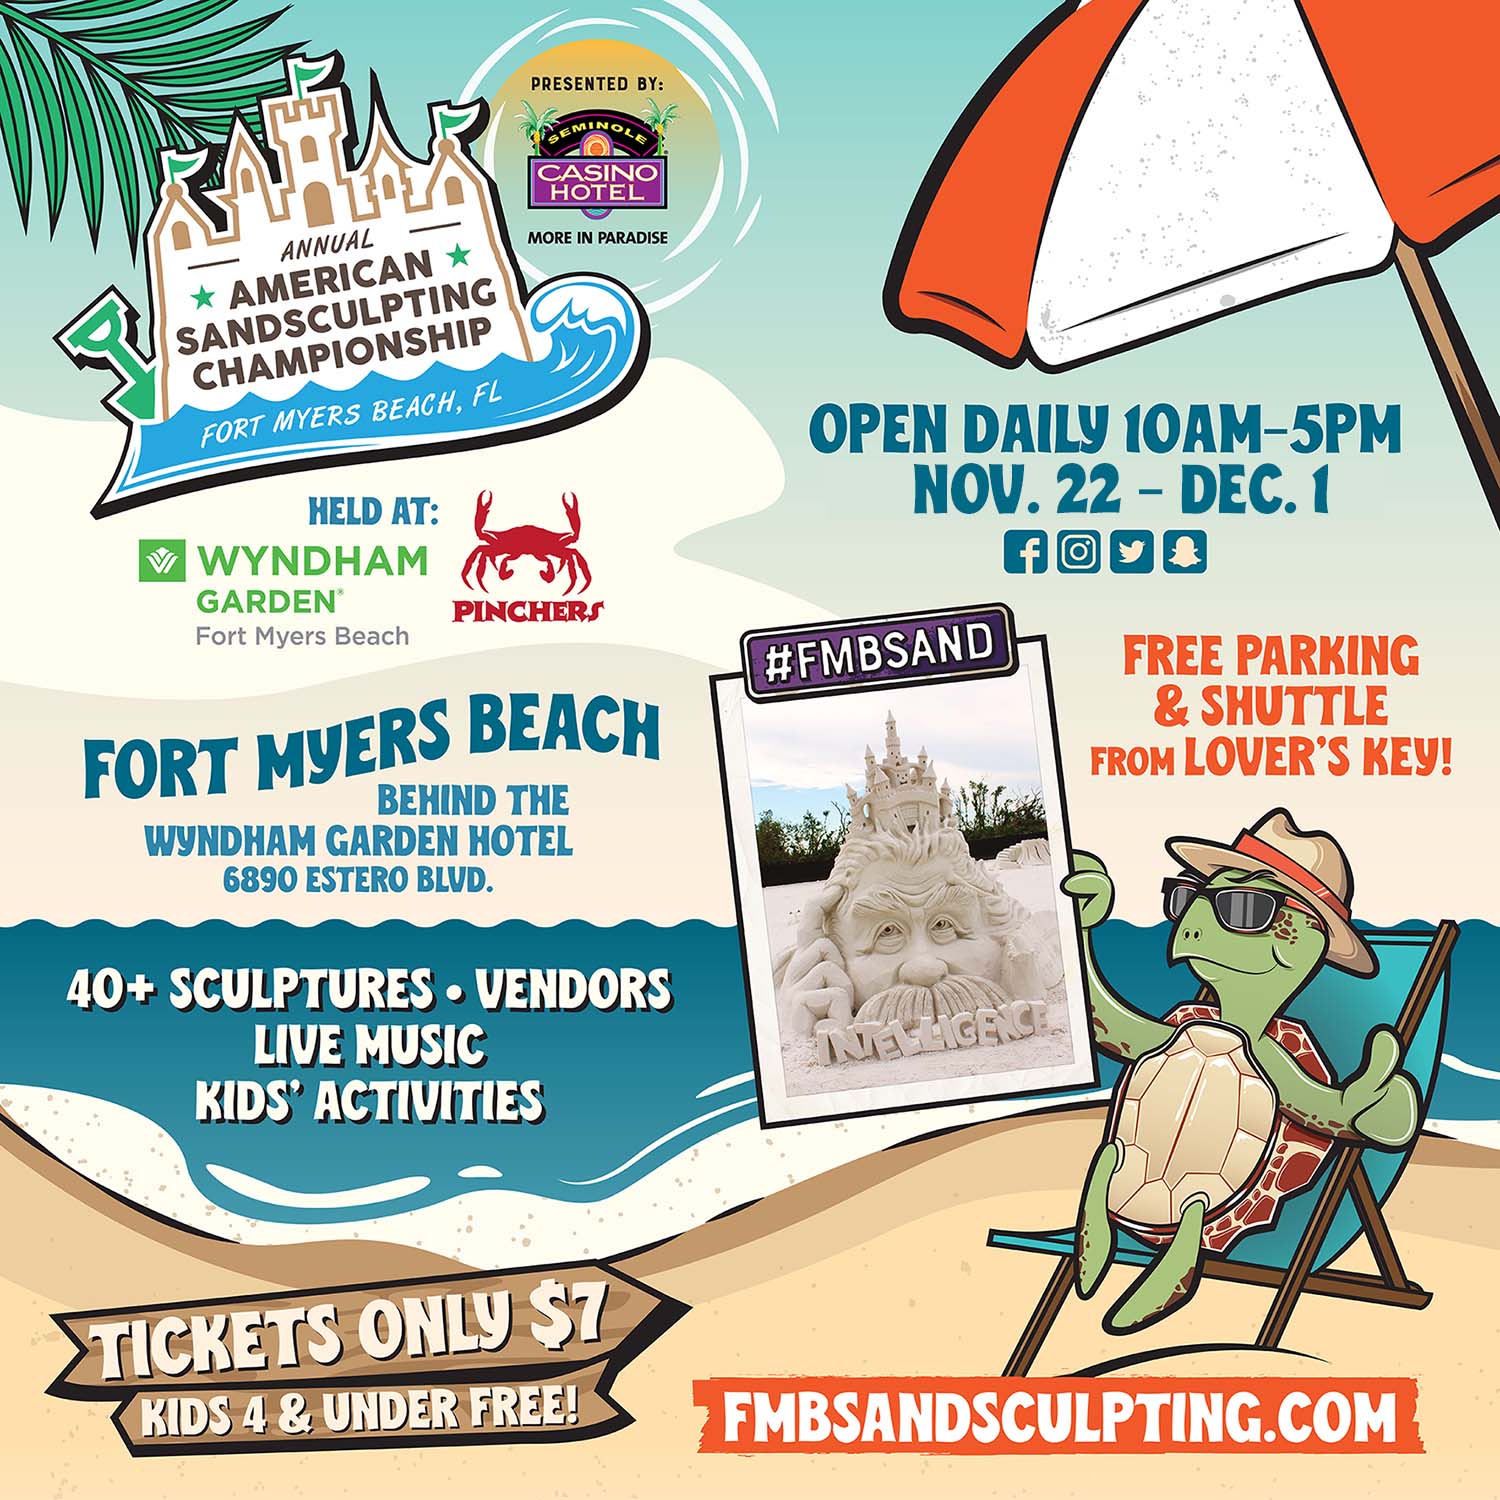 Sandsculpting Championship Fort Myers Beach, FL